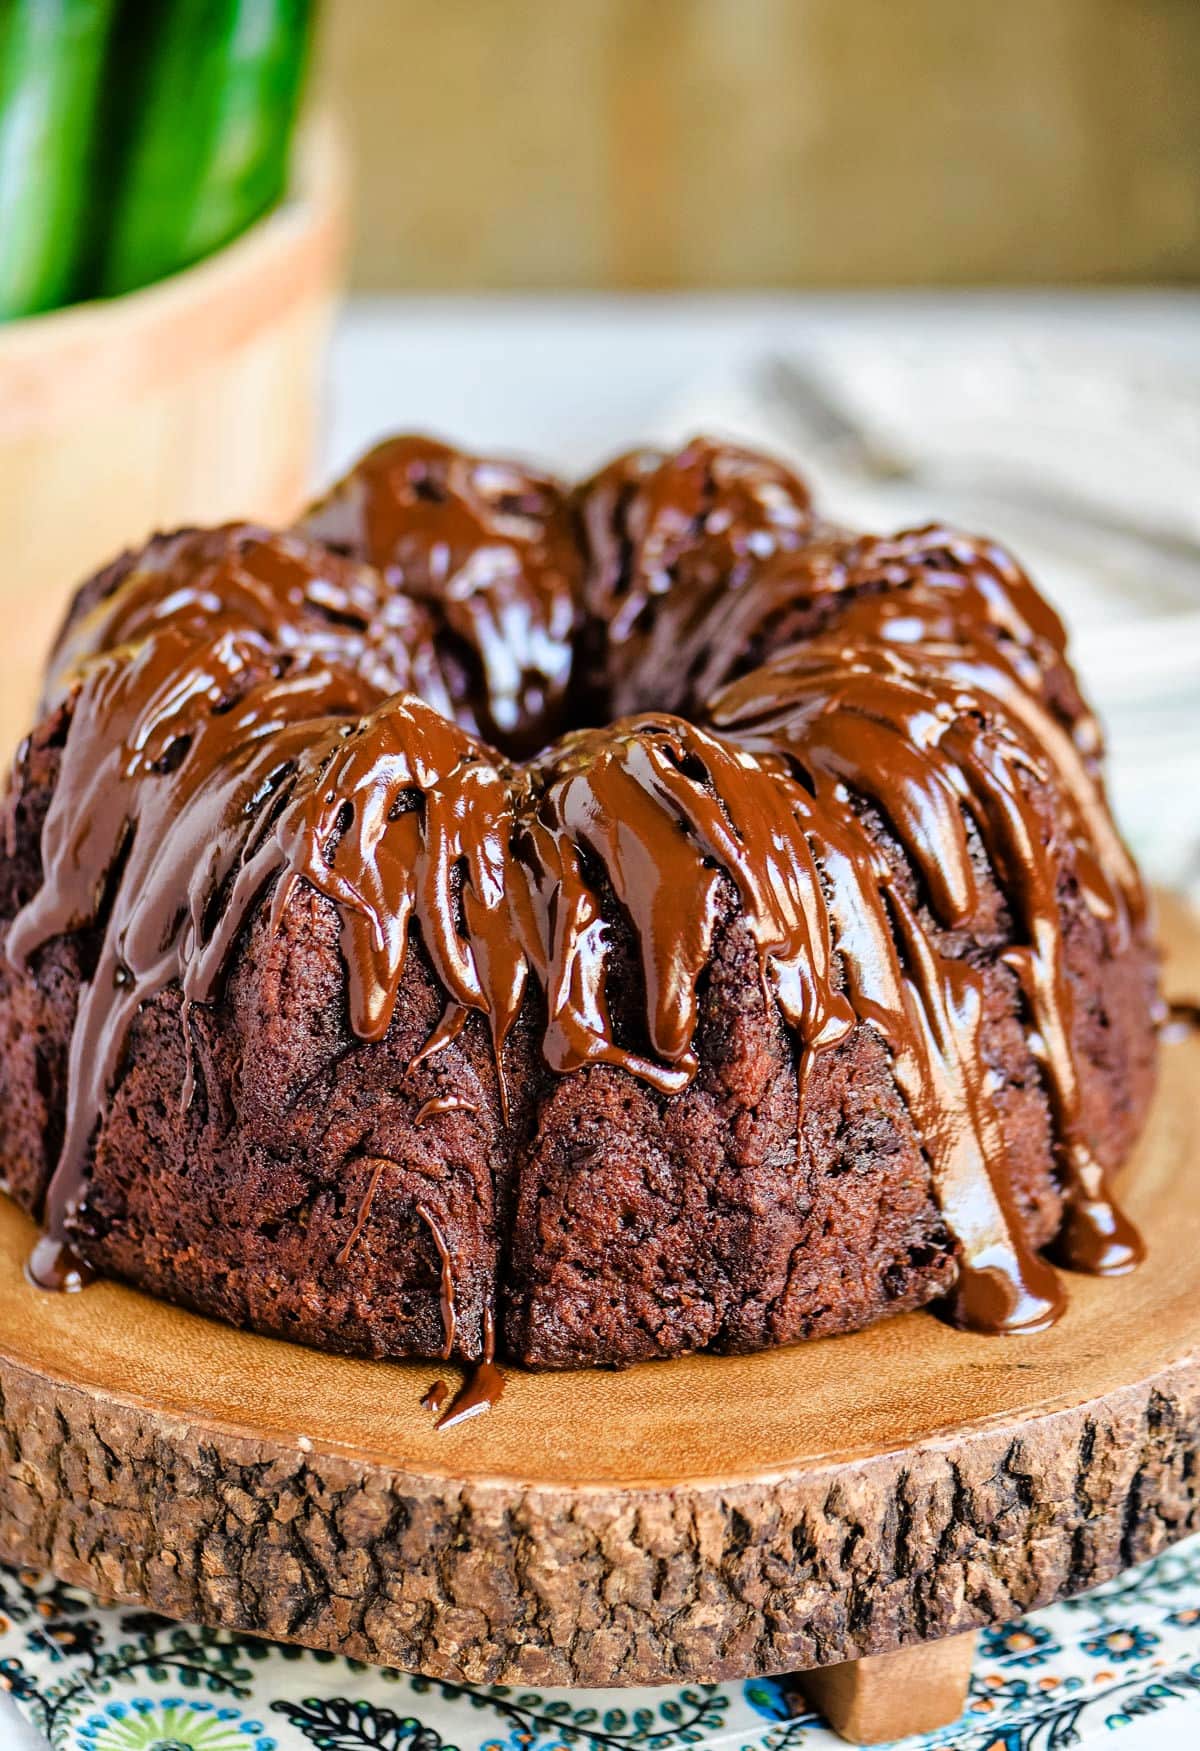 beautiful shiny chocolate glaze on top of a bundt cake.